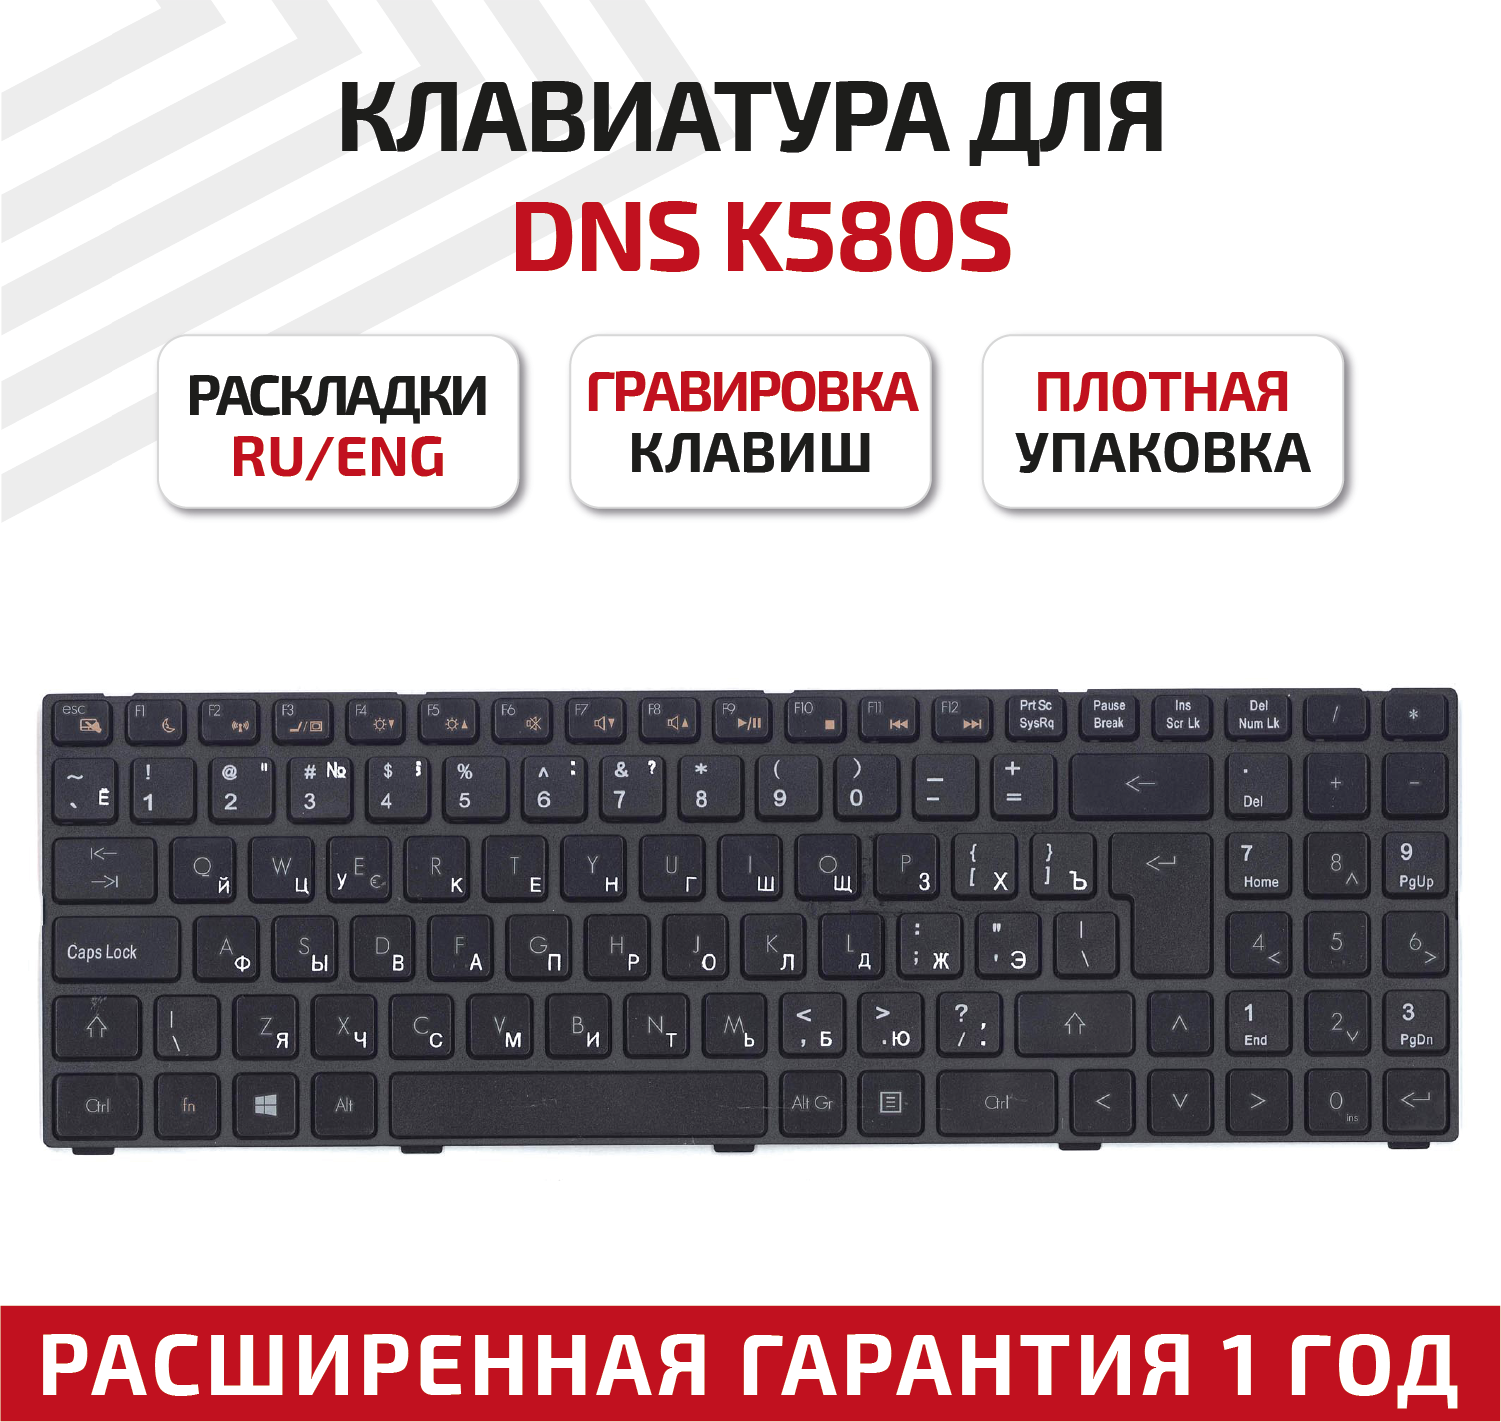 Клавиатура (keyboard) MP-09R63SU-920 для ноутбука DNS K580S, DNS 0155959, 0158645, Quanta TWH K580S, черная с рамкой